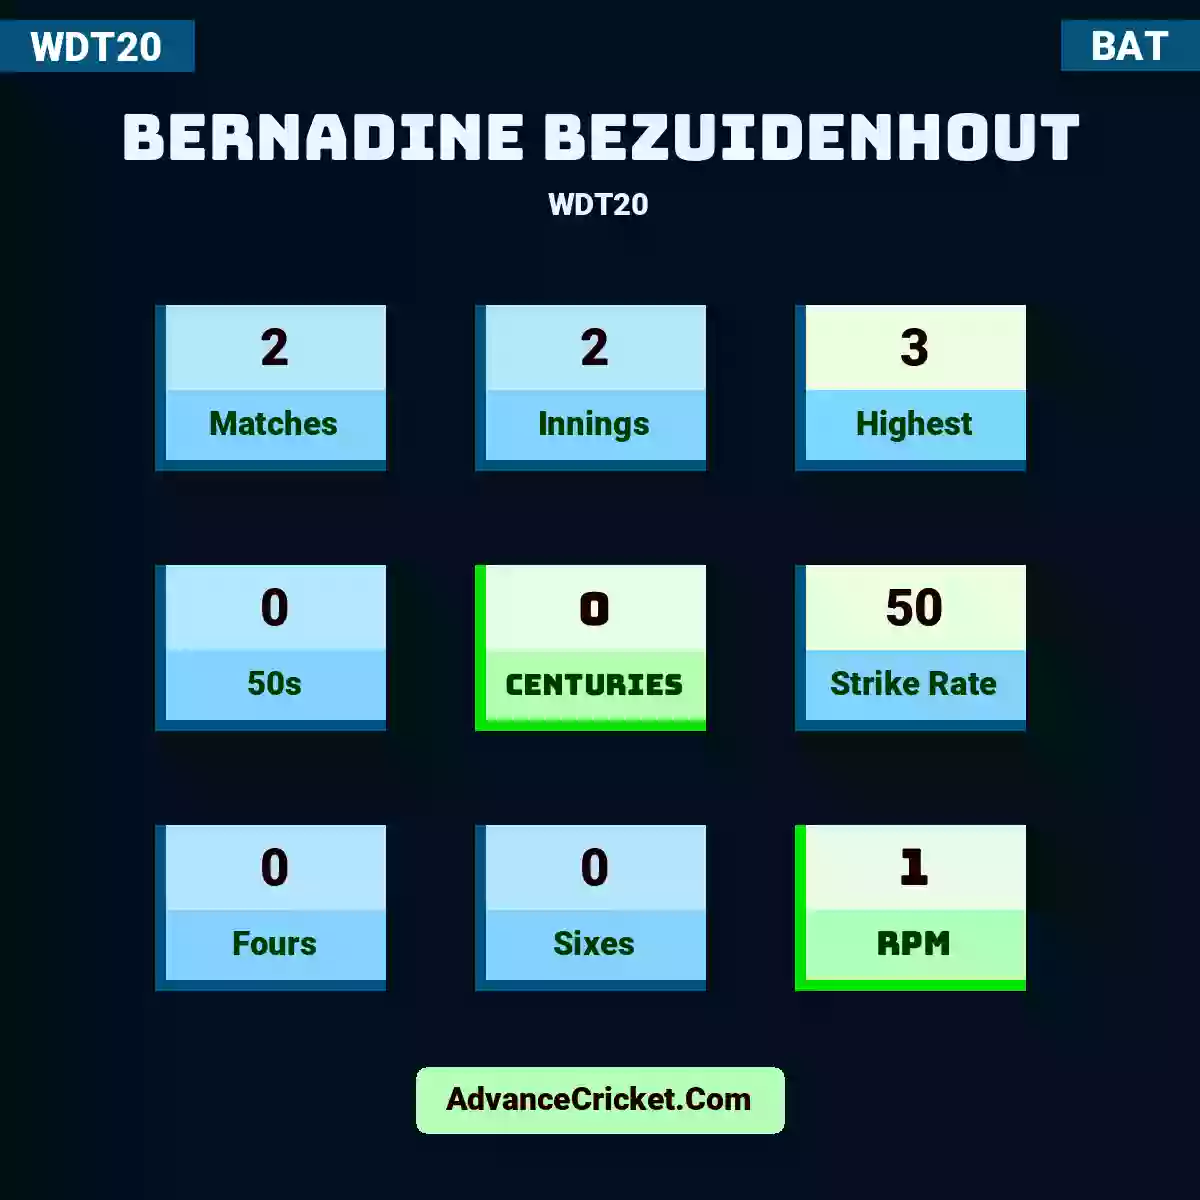 Bernadine Bezuidenhout WDT20 , Bernadine Bezuidenhout played 2 matches, scored 3 runs as highest, 0 half-centuries, and 0 centuries, with a strike rate of 50. B.Bezuidenhout hit 0 fours and 0 sixes, with an RPM of 1.